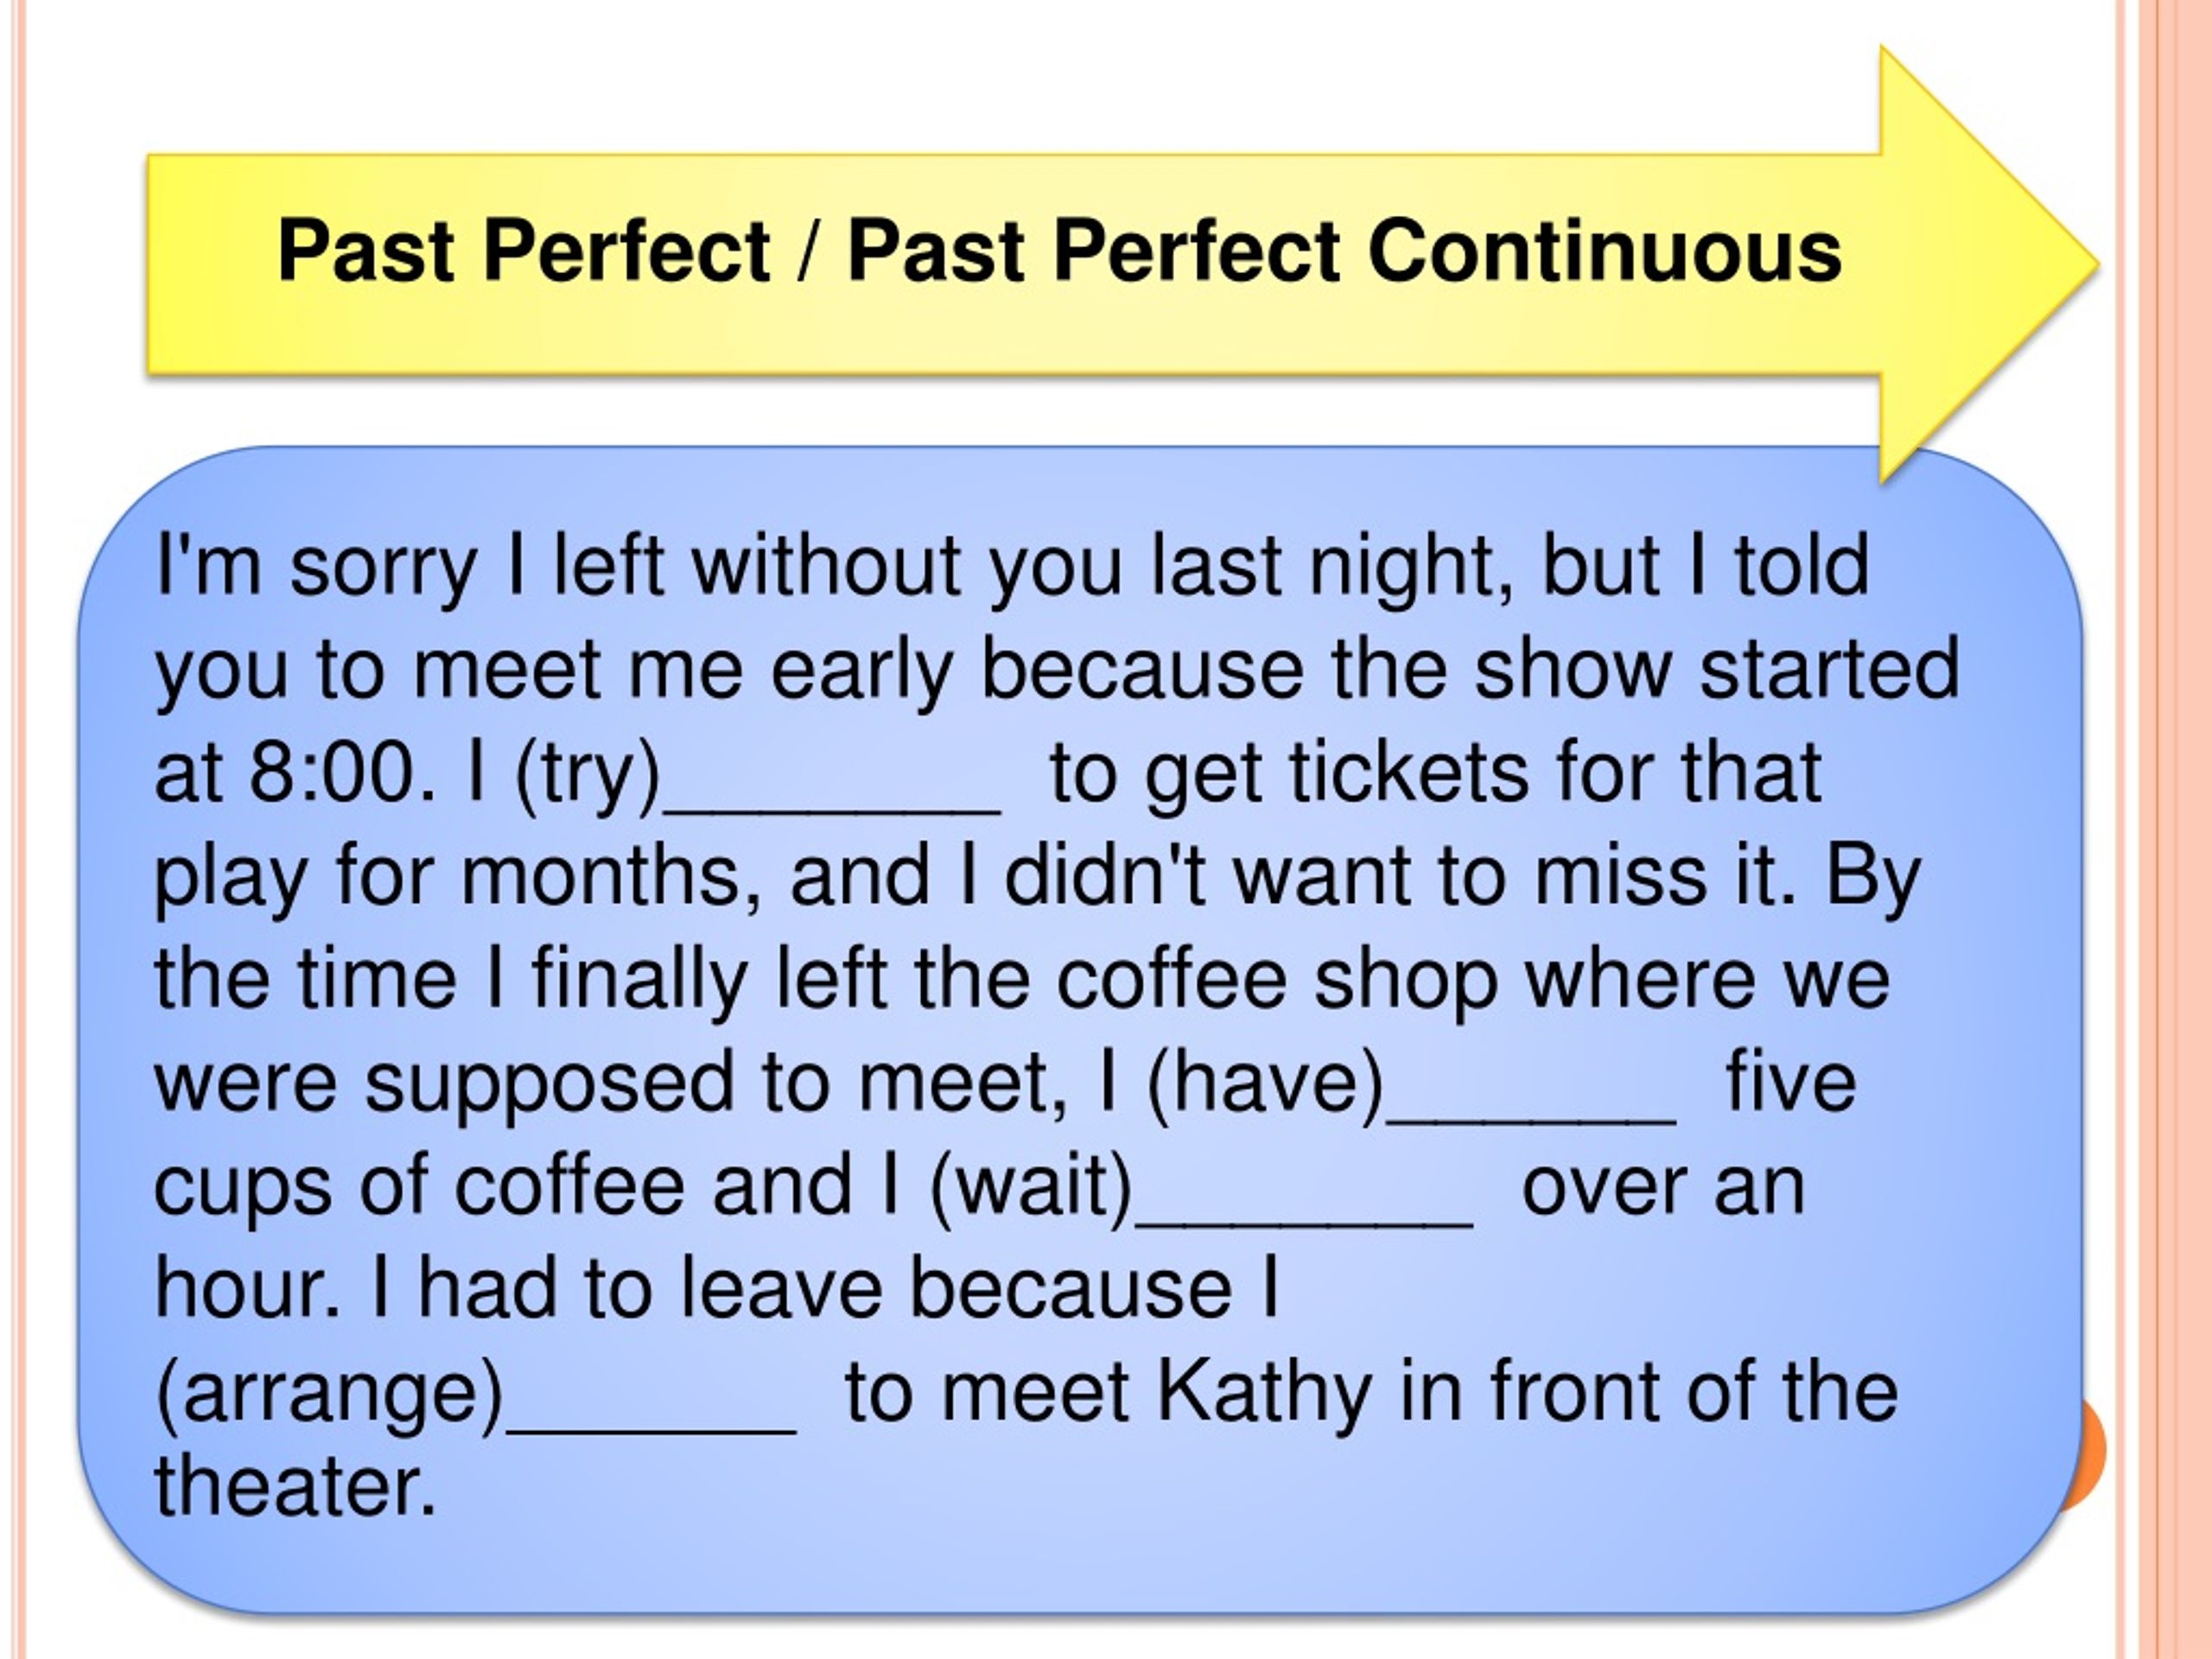 Perfect continuous tenses упражнения. Past perfect past perfect Continuous упражнения 8 класс. Past perfect past perfect Continuous упражнения. Past perfect Continuous упражнения. Past perfect упражнения.